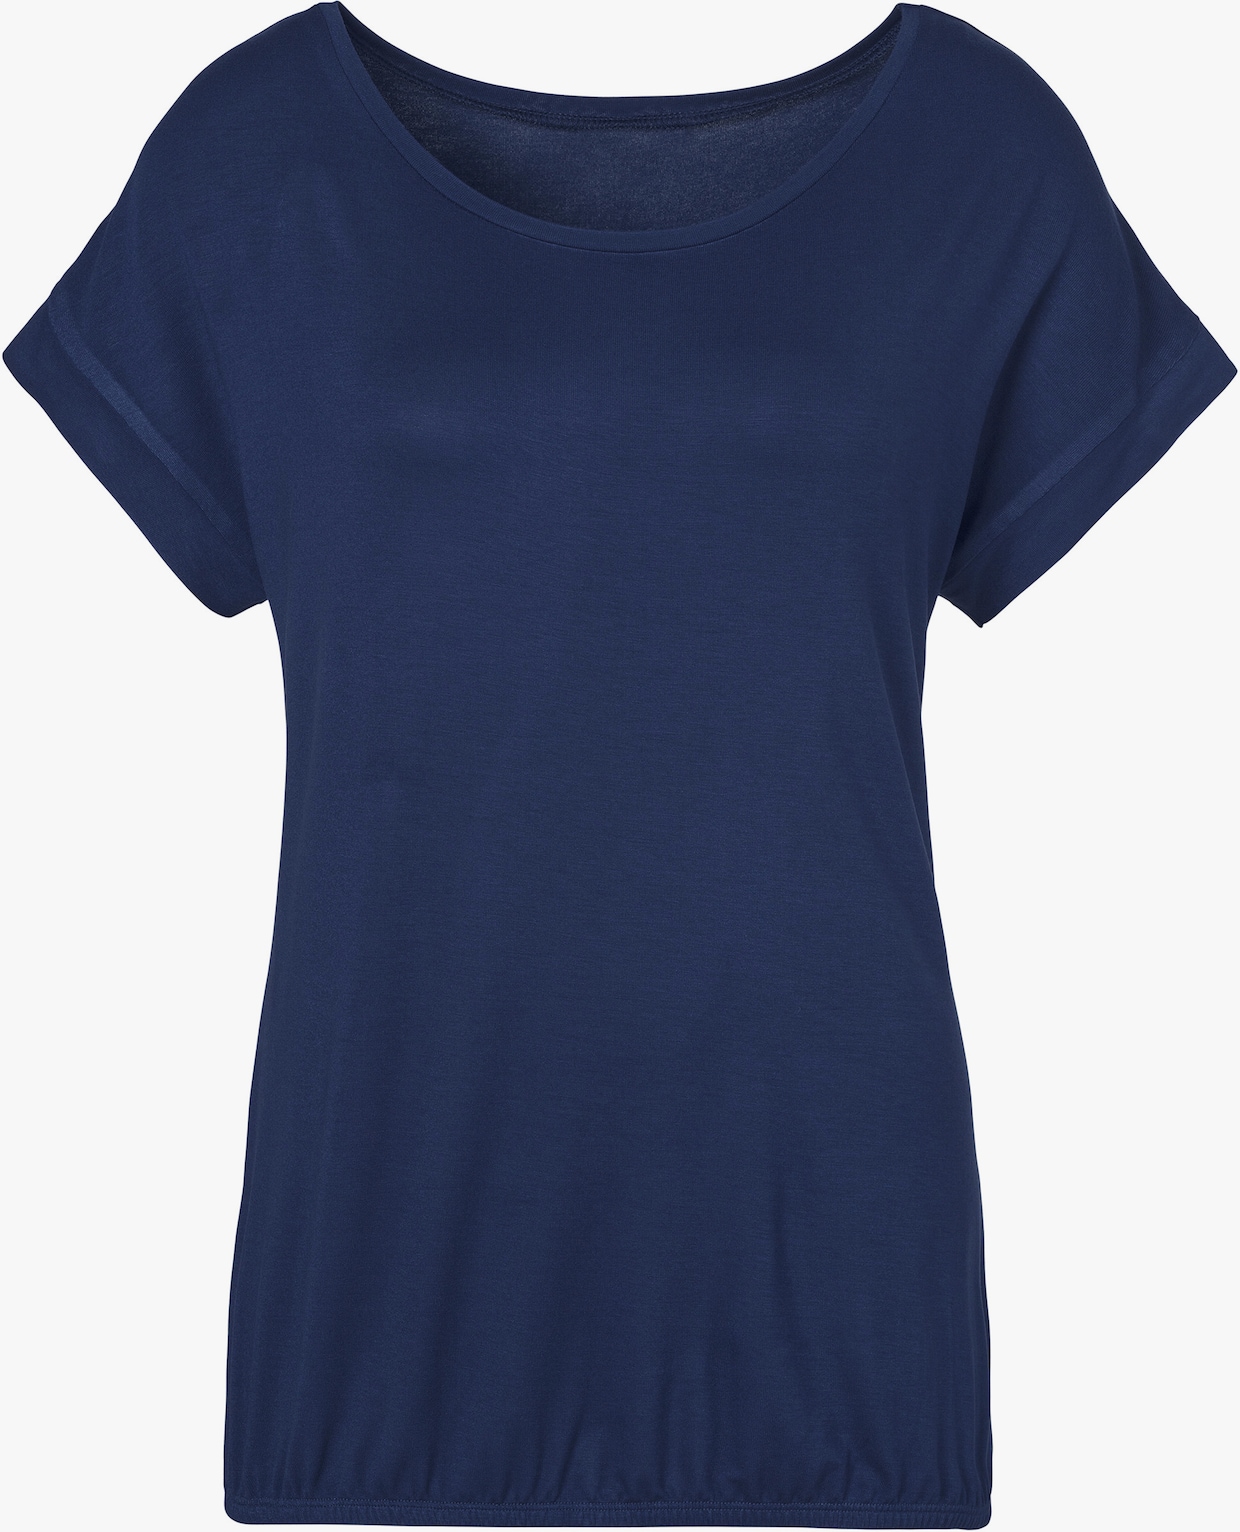 Vivance T-shirt - koraal, marine